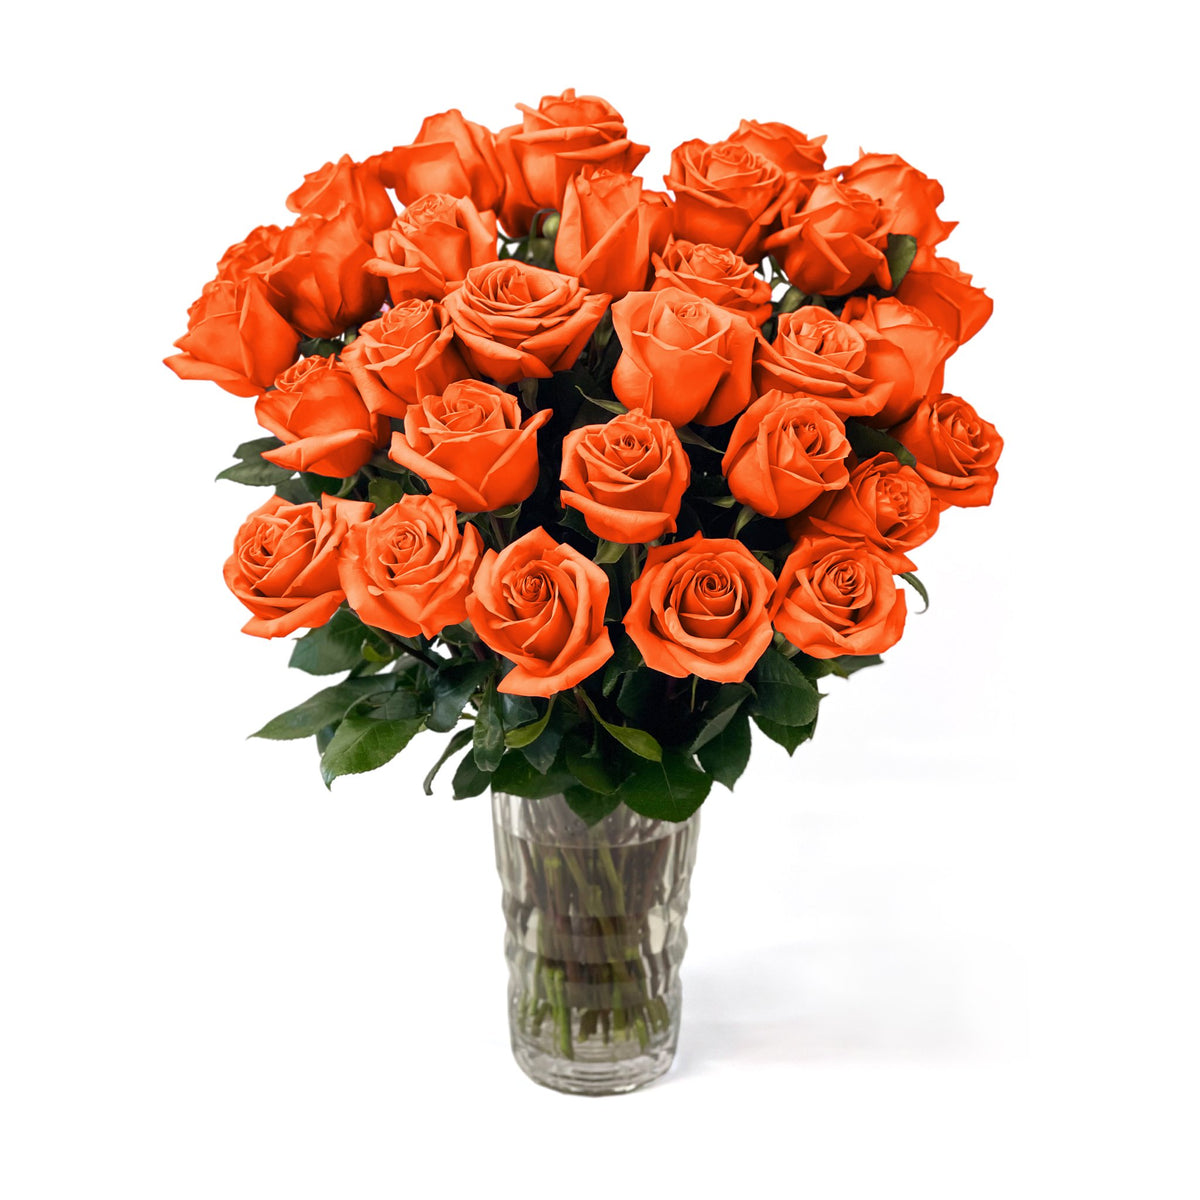 Queens Flower Delivery - Fresh Roses in a Crystal Vase | Orange - 4 Dozen